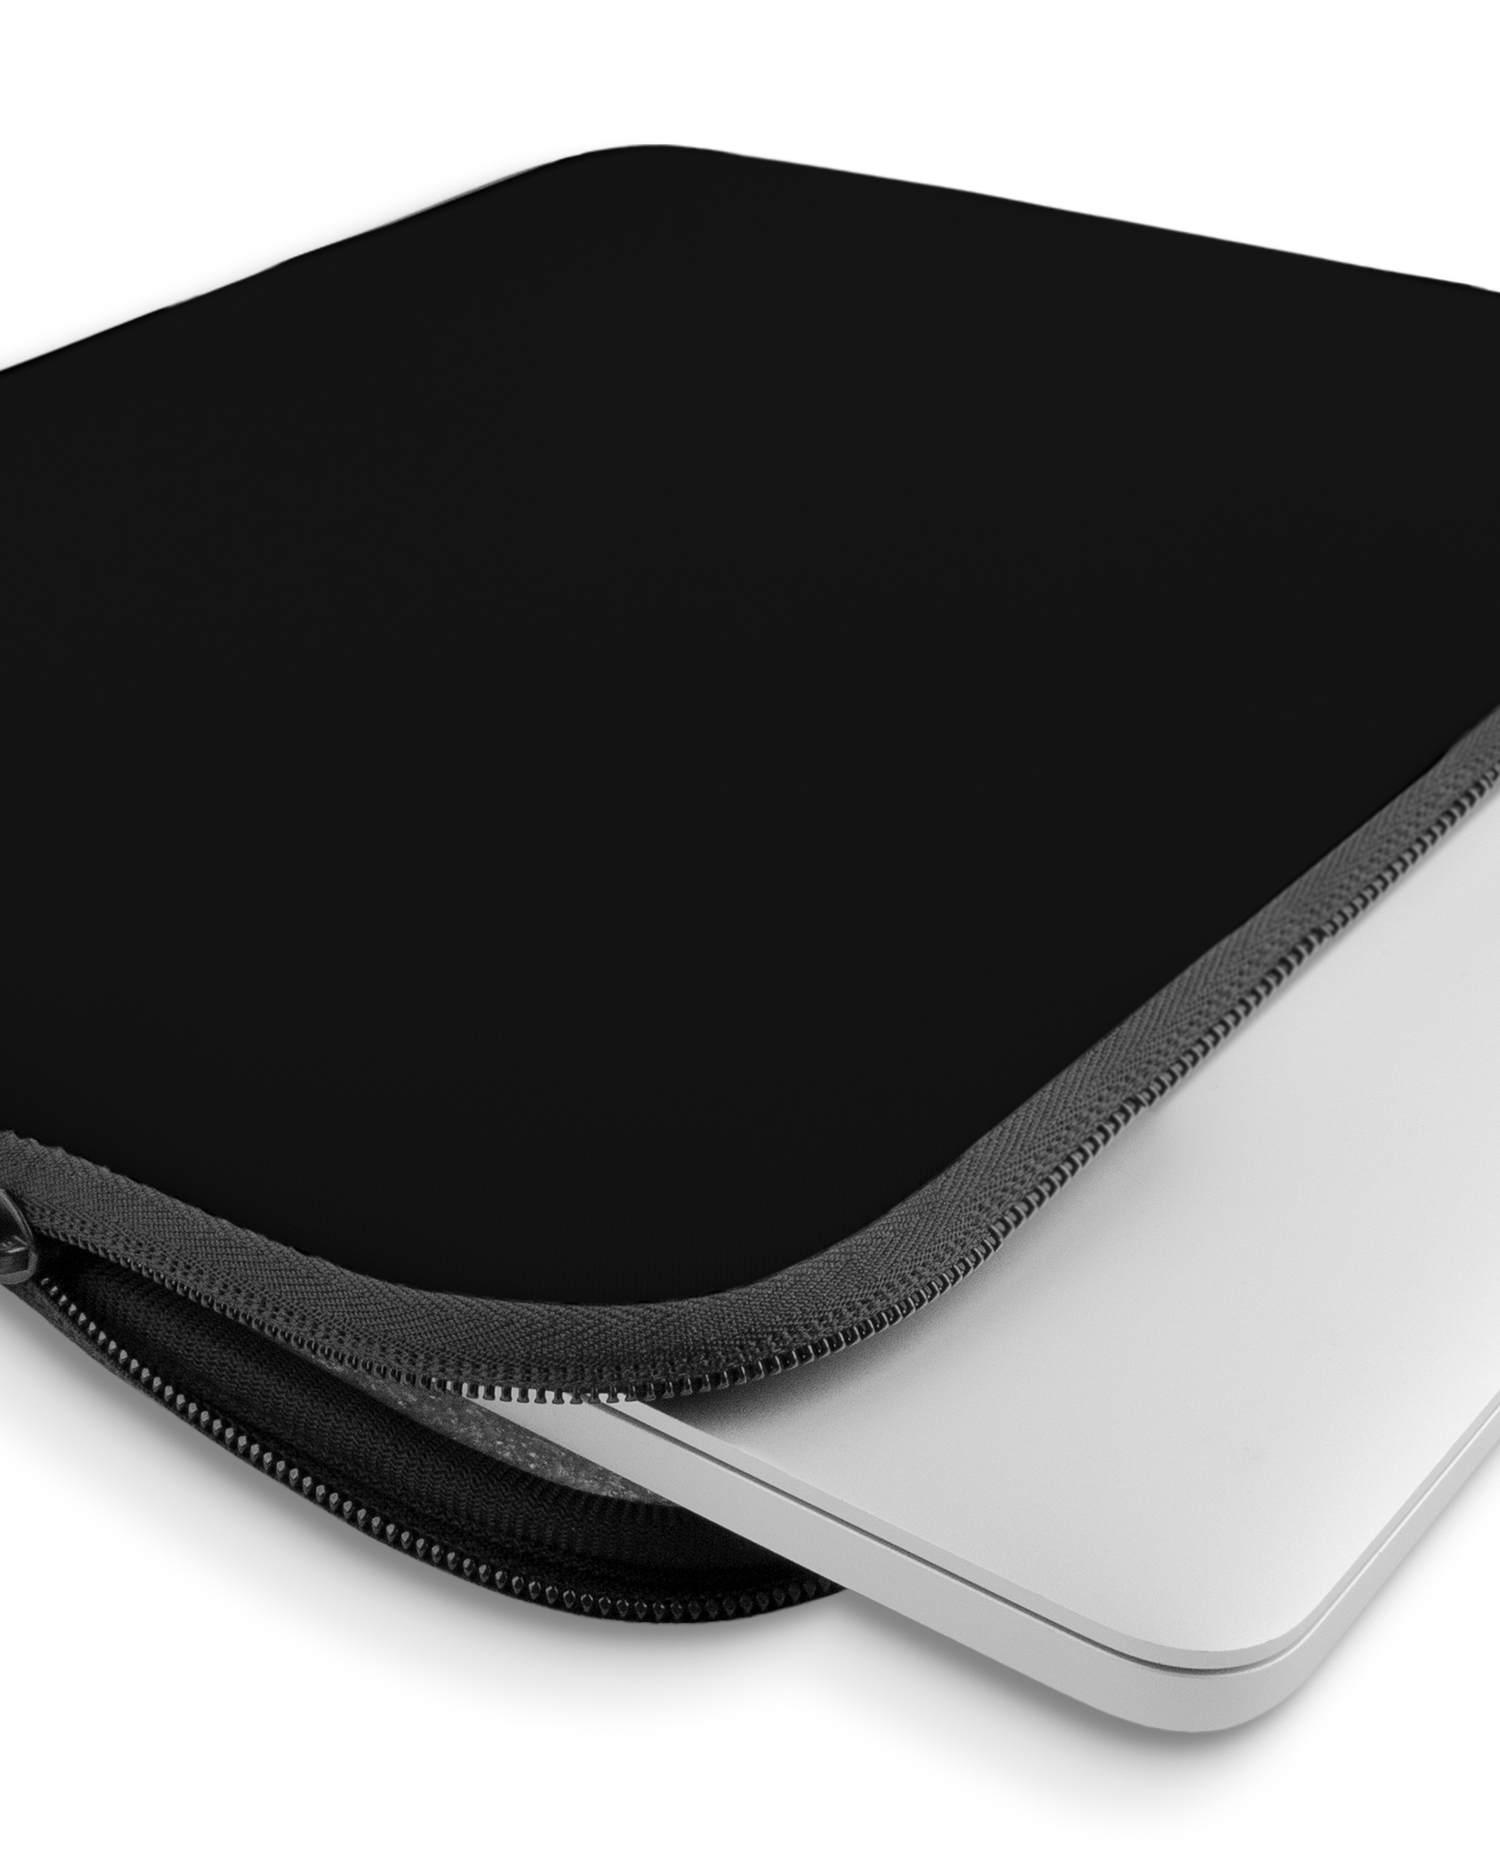 BLACK Laptophülle 15 Zoll mit Gerät im Inneren